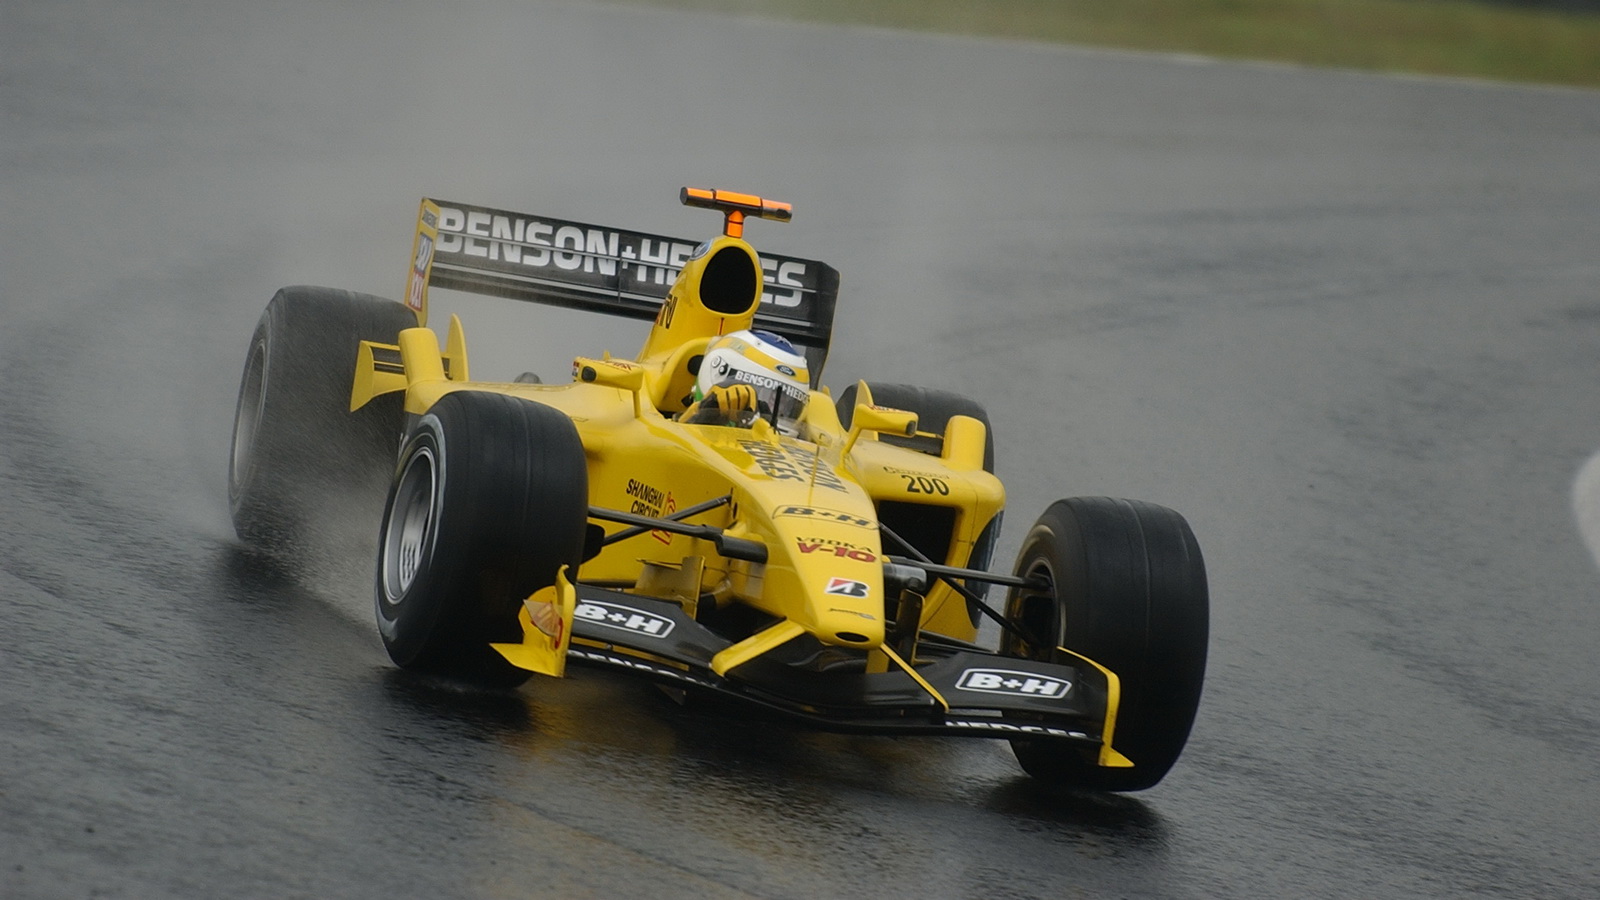 Fisichella_Jordan_Brazil GP 2003